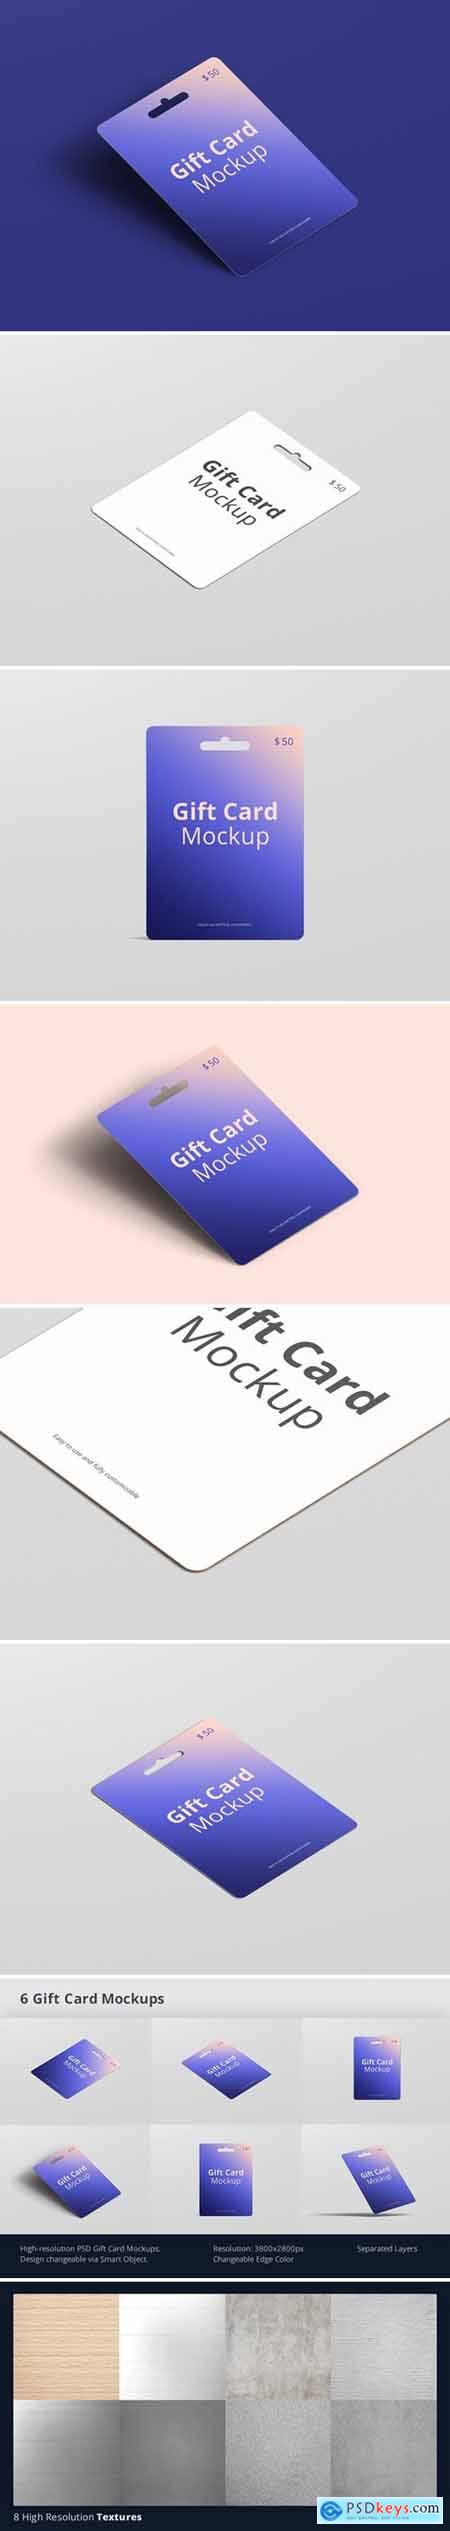 Gift Card Mockup 2